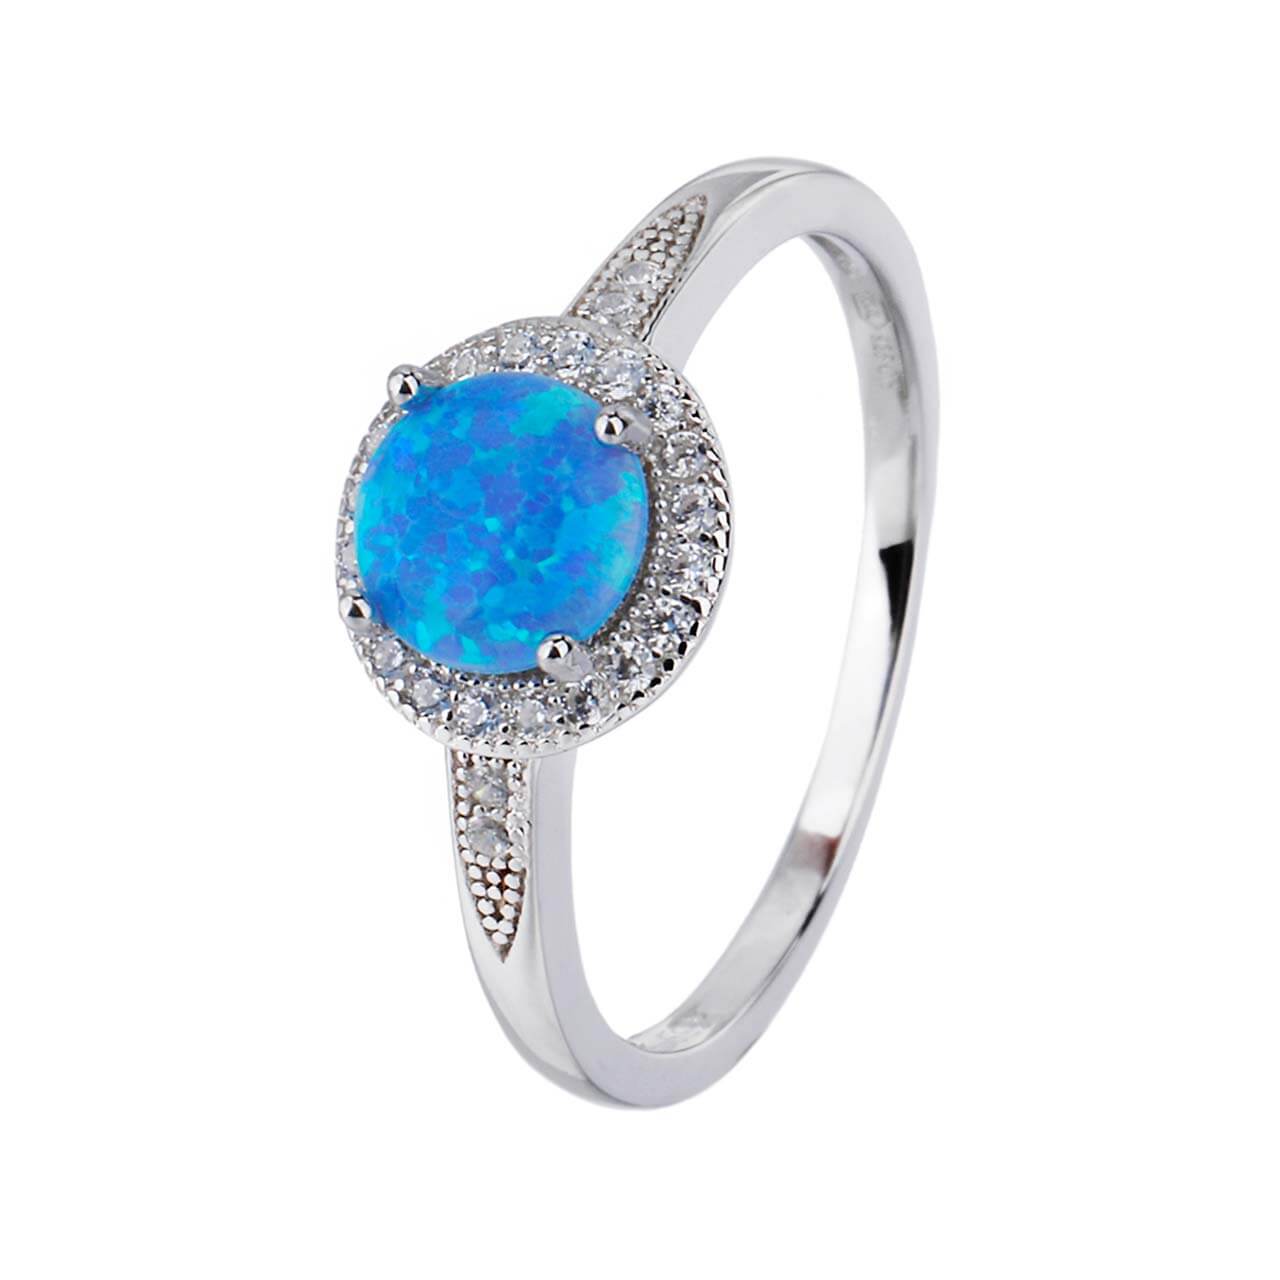 Stříbrný prsten SOLITÉR modrý OPÁL Velikost prstenu: 53 Ag 925/1000